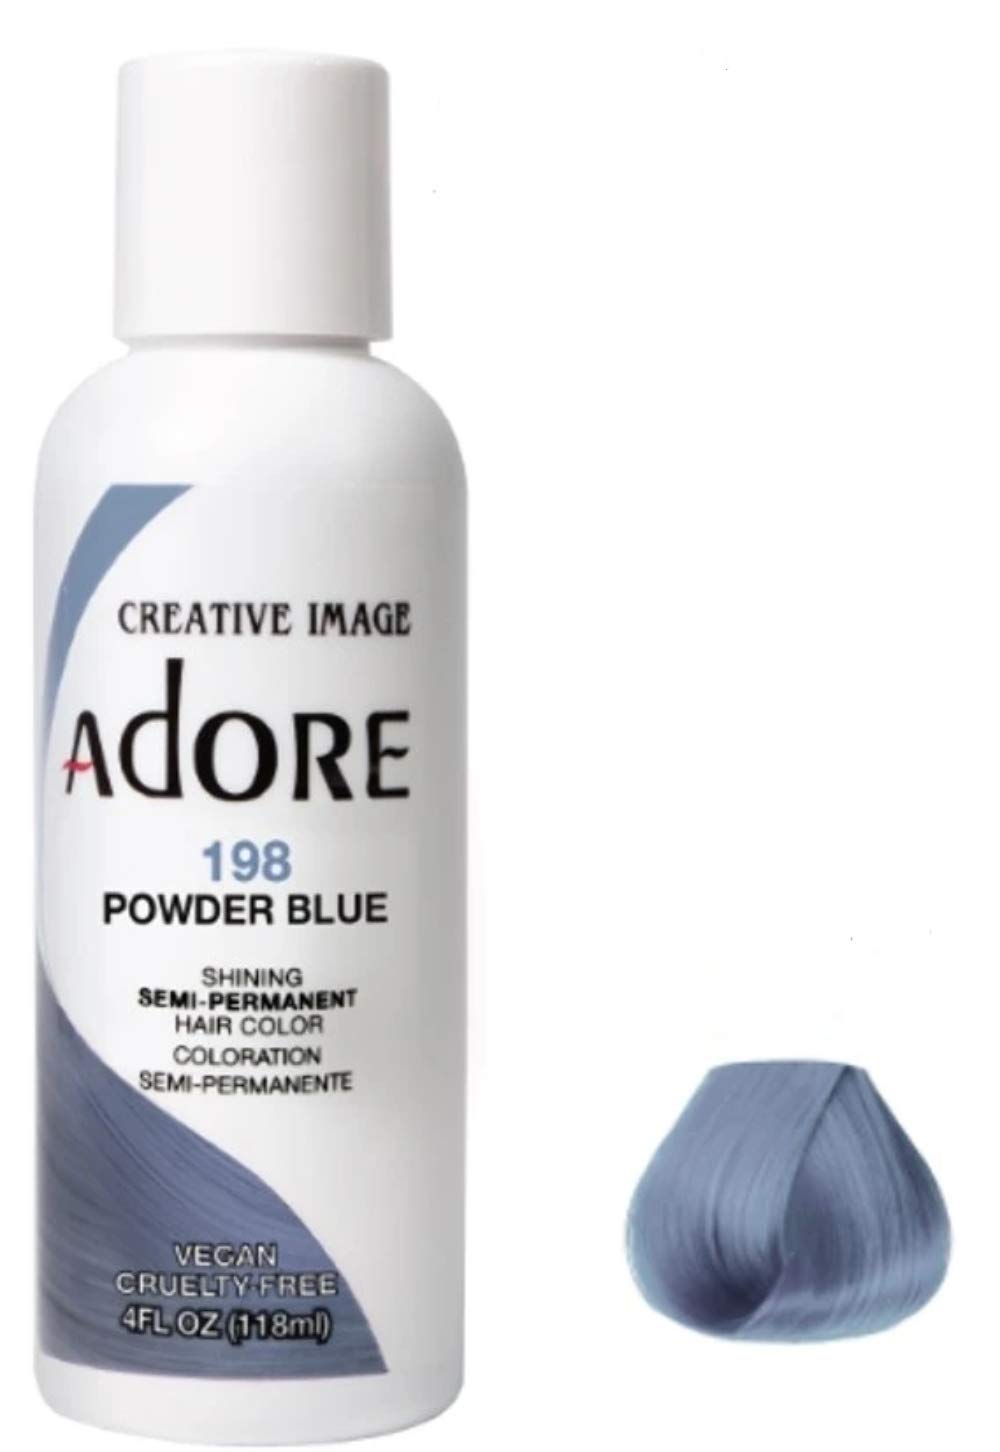 Adore Hair Color 198 - Powder Blue